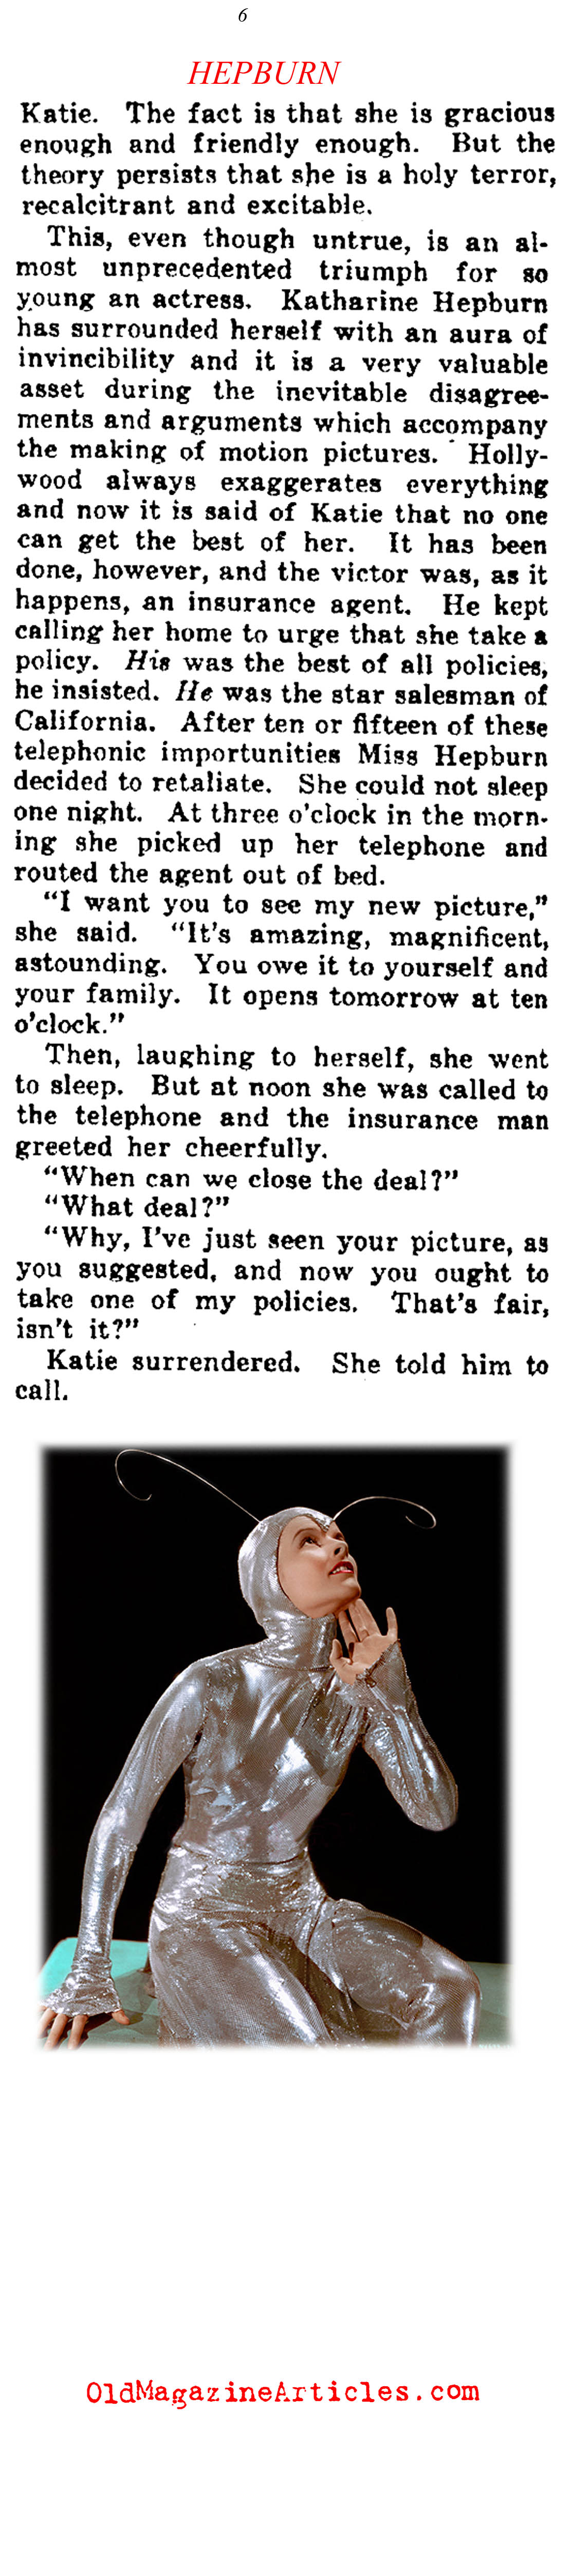 One of the First Katherine Hepburn Interviews (Collier's Magazine, 1933)